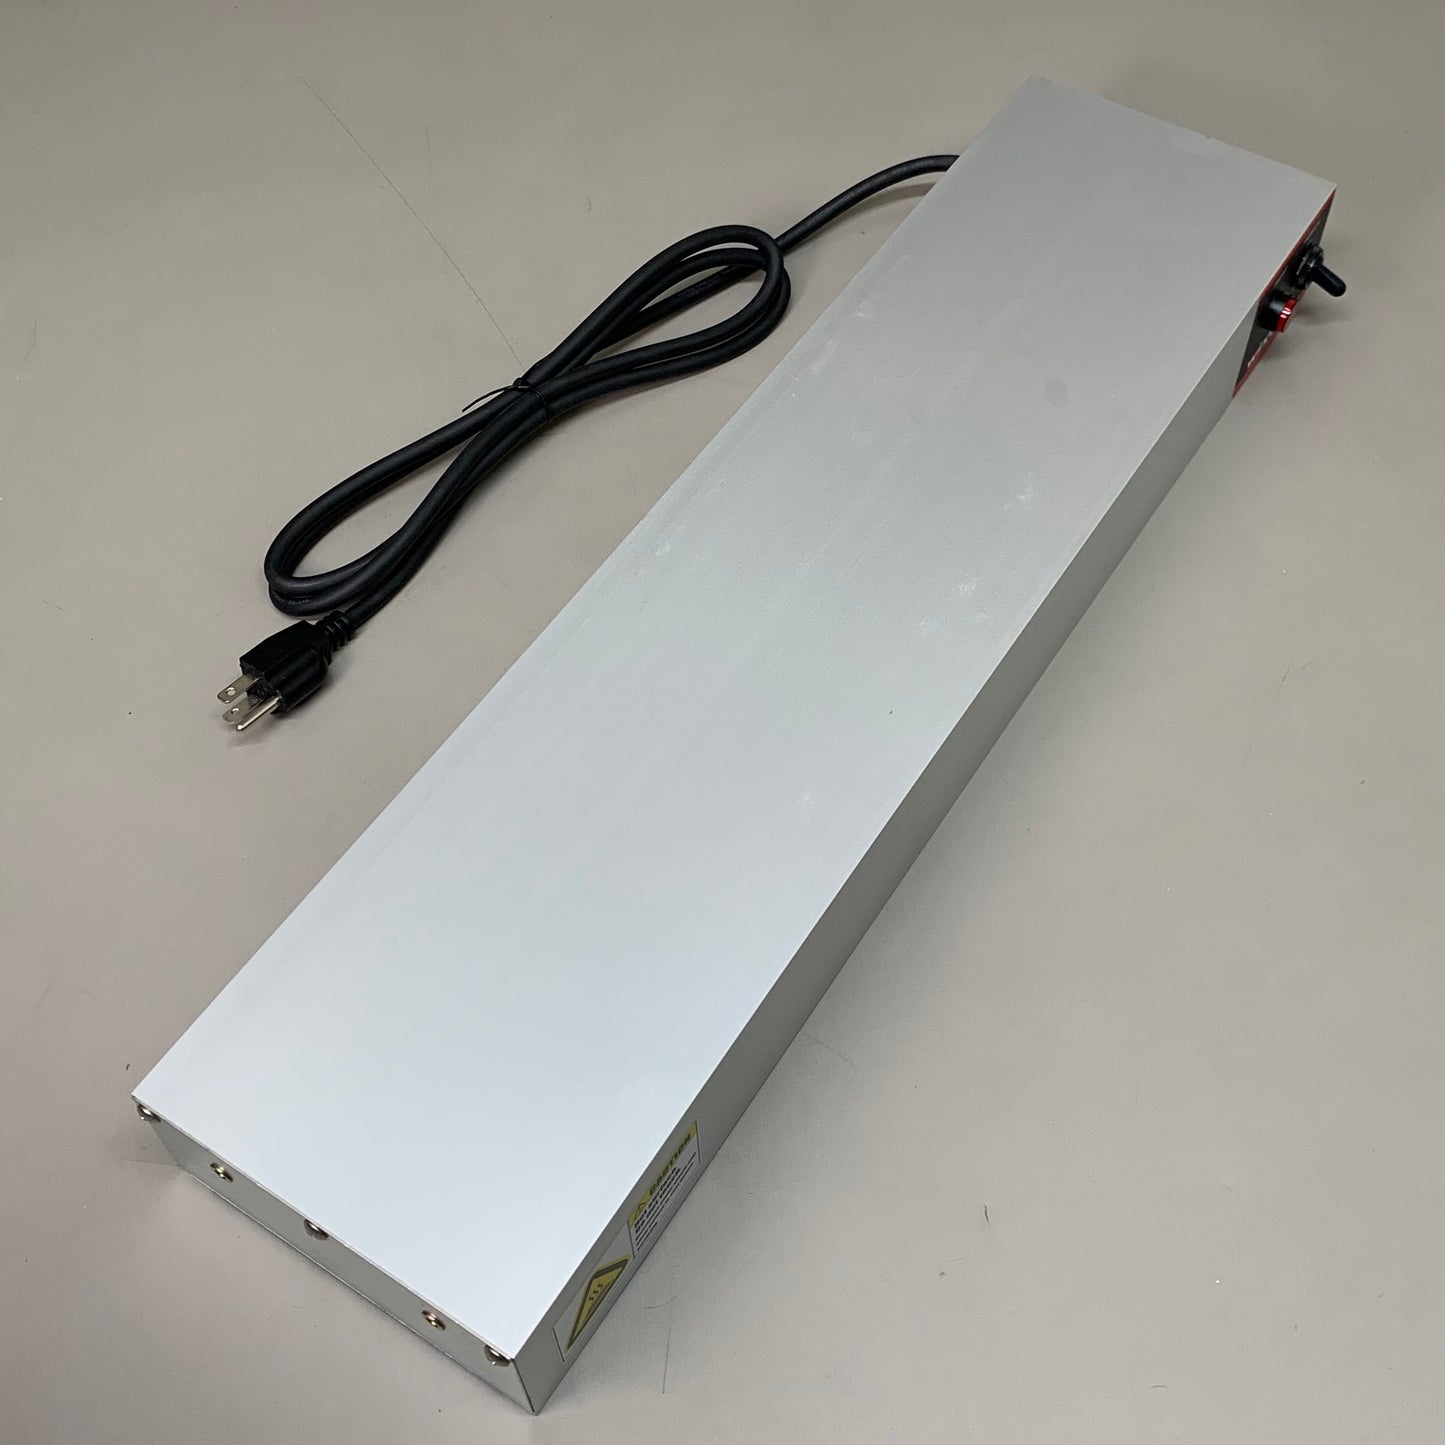 WINCO Single Infrared Strip Heater Aluminum 120V, 500 W ESH-24